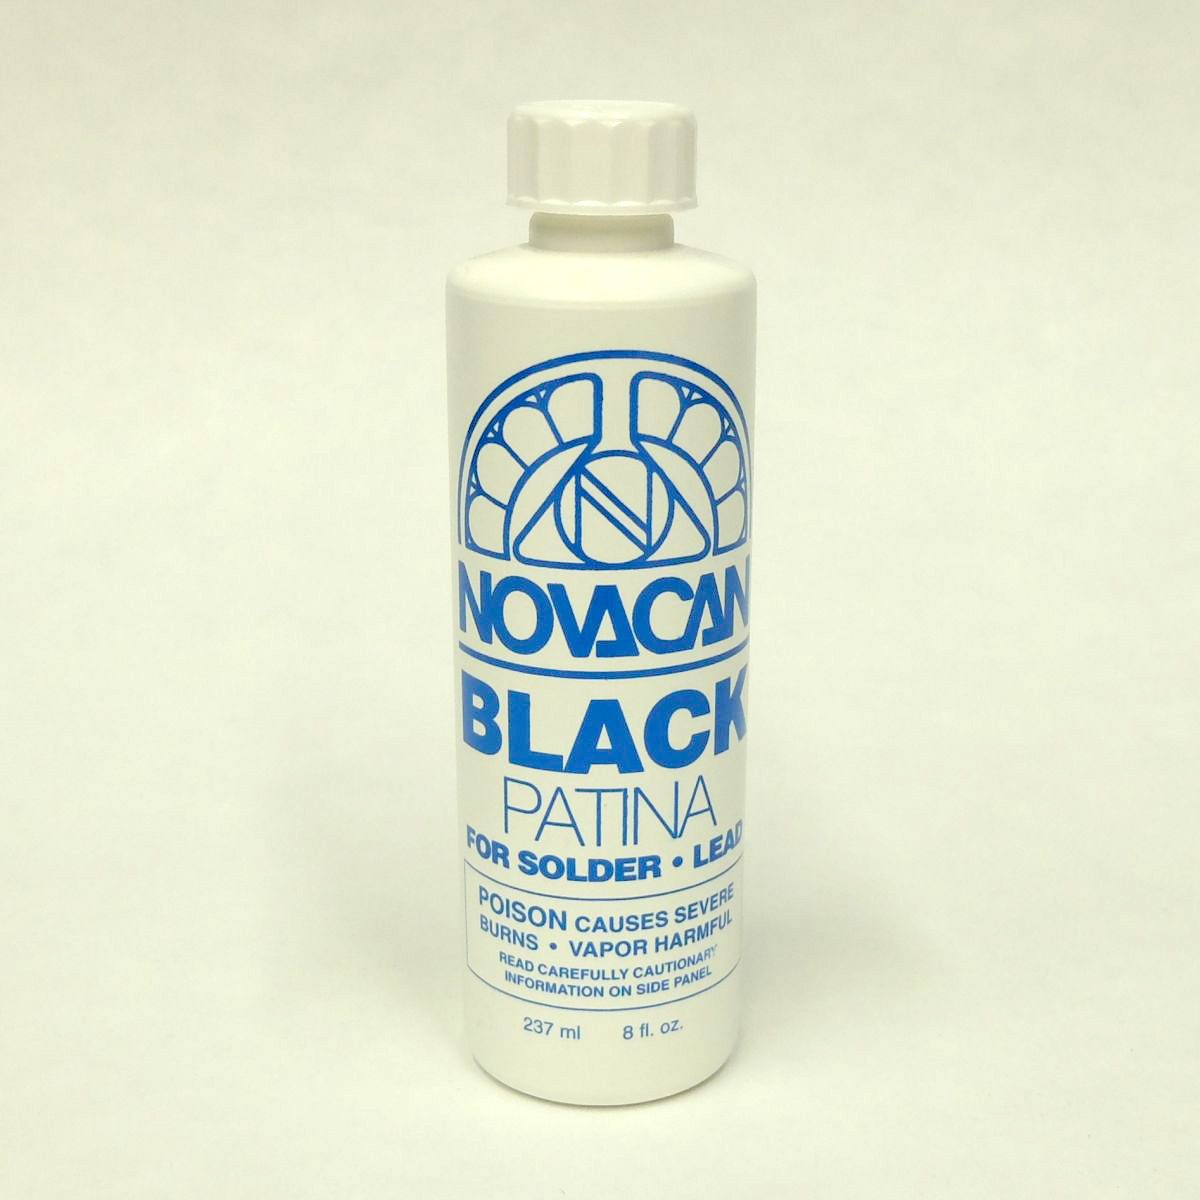 Novacan Black Patina For Solder, 16 oz